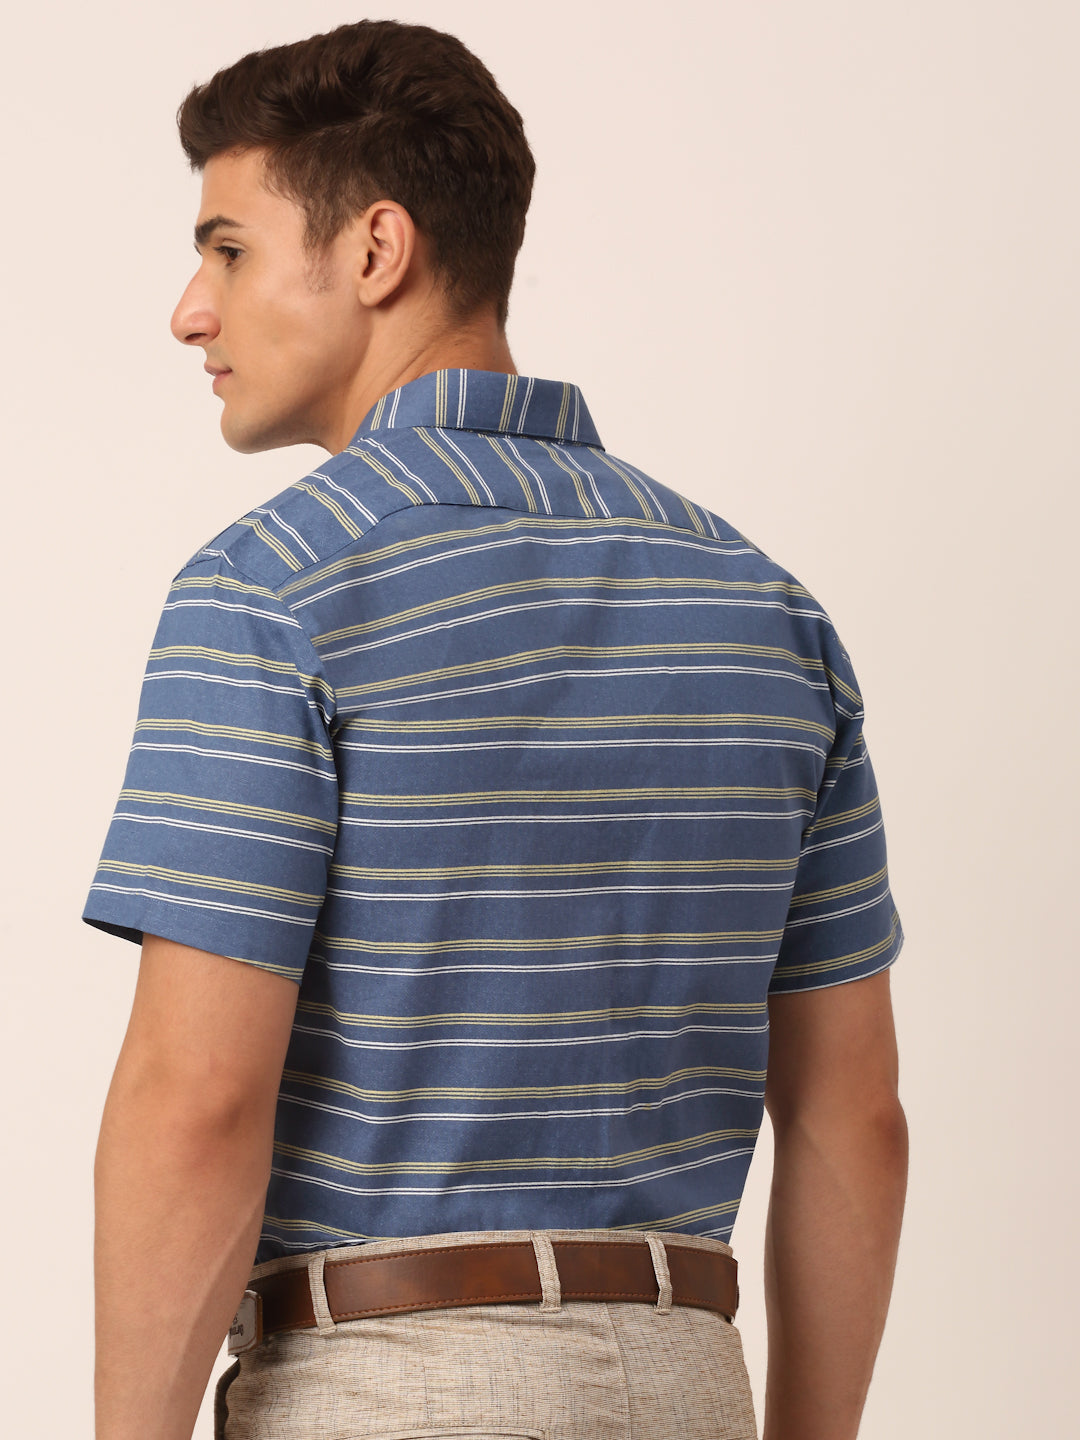 Men's Cotton Striped Half Sleeve Formal Shirts ( SF 816Blue ) - Jainish